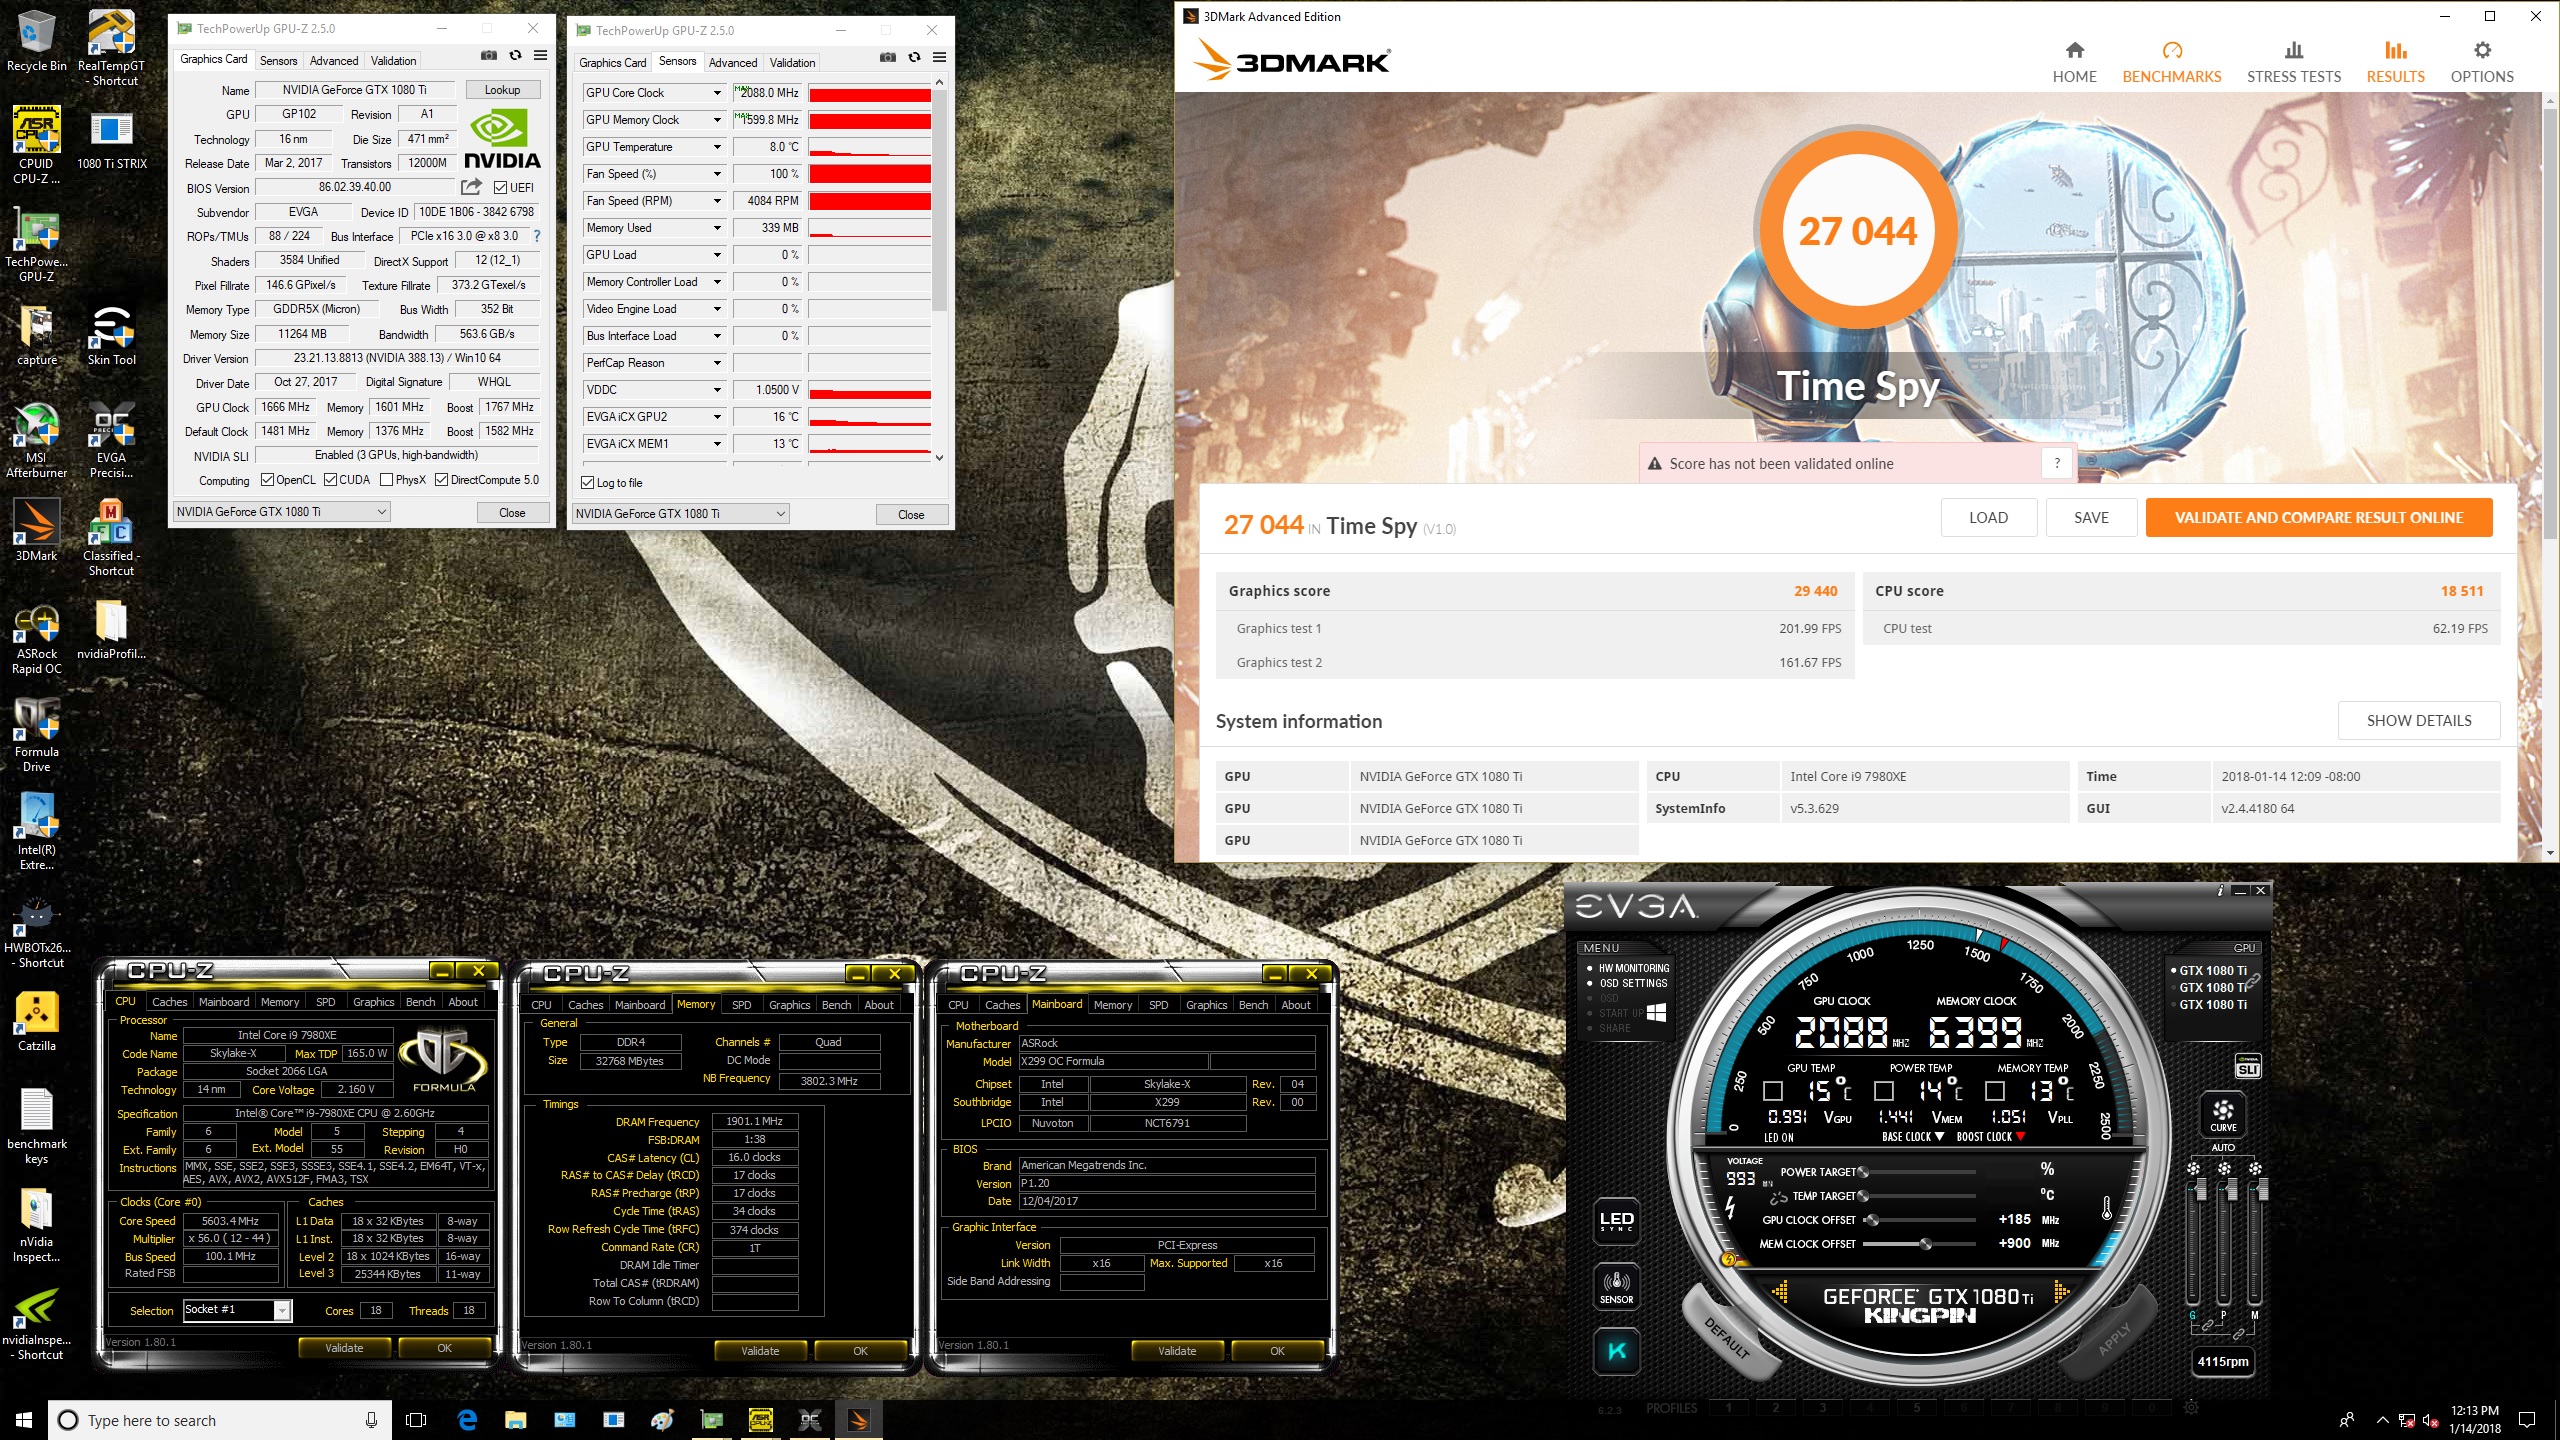 Gunslinger`s 3DMark - Time Spy score: 27044 marks with a GeForce GTX 1080 Ti